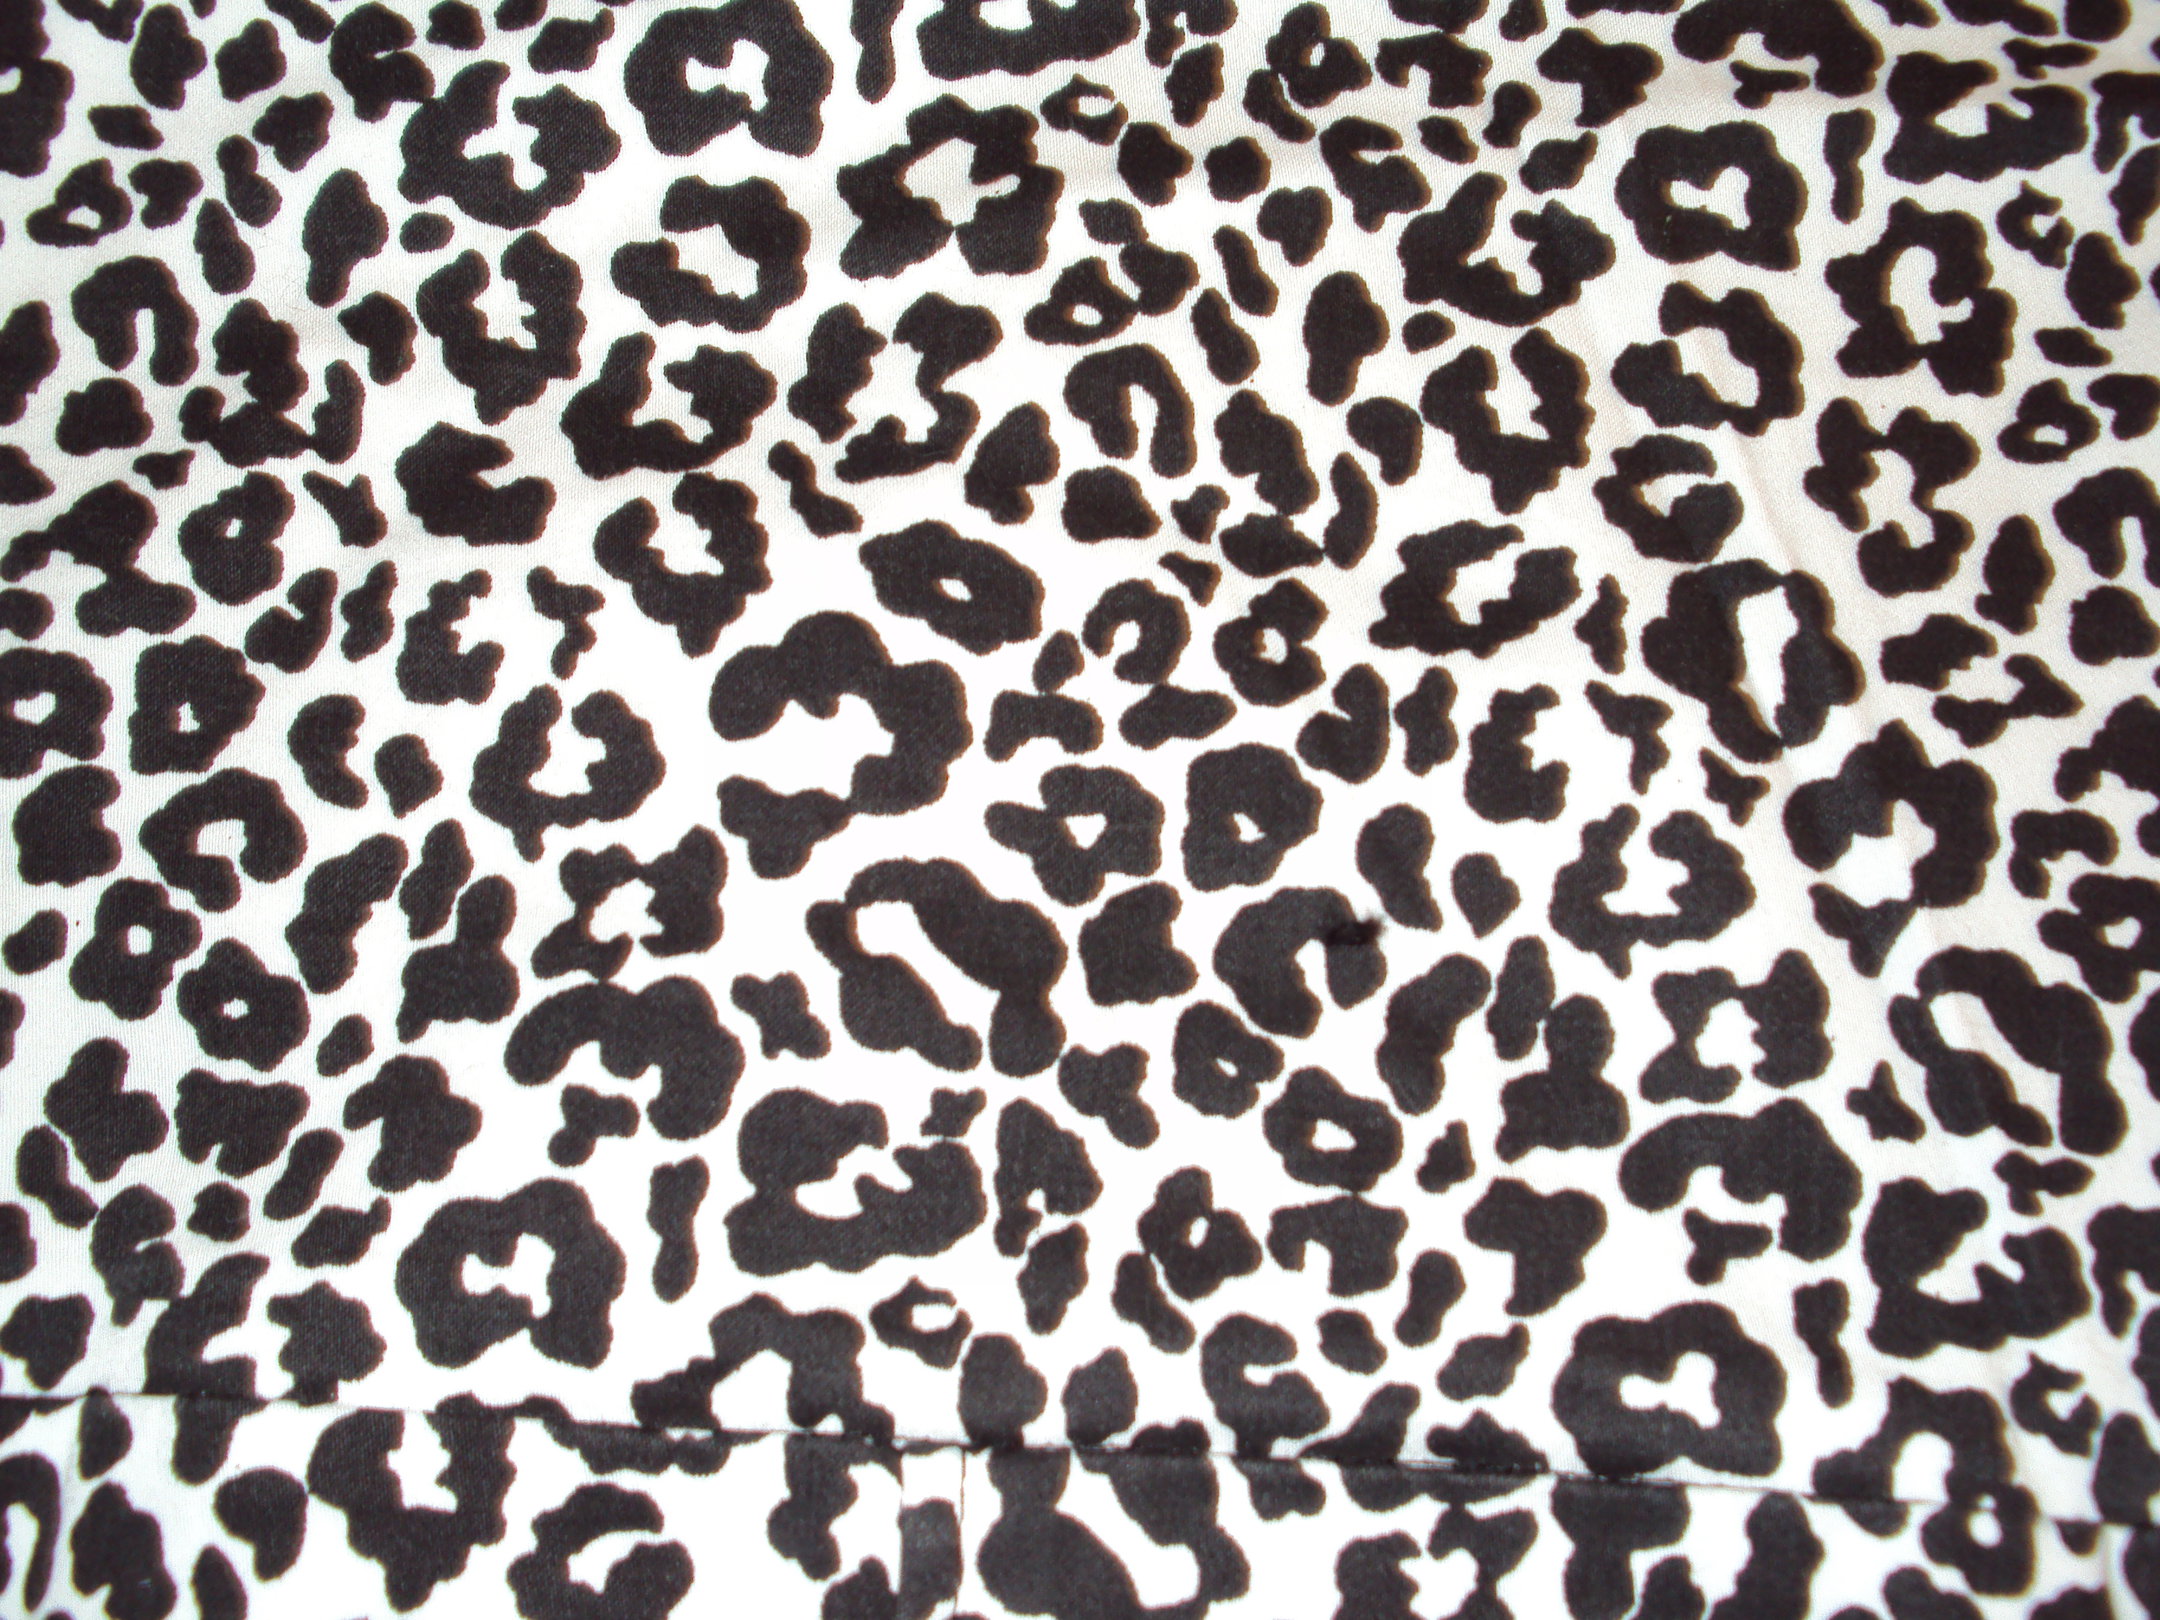 leopard texture 2 by ghoulskout on DeviantArt